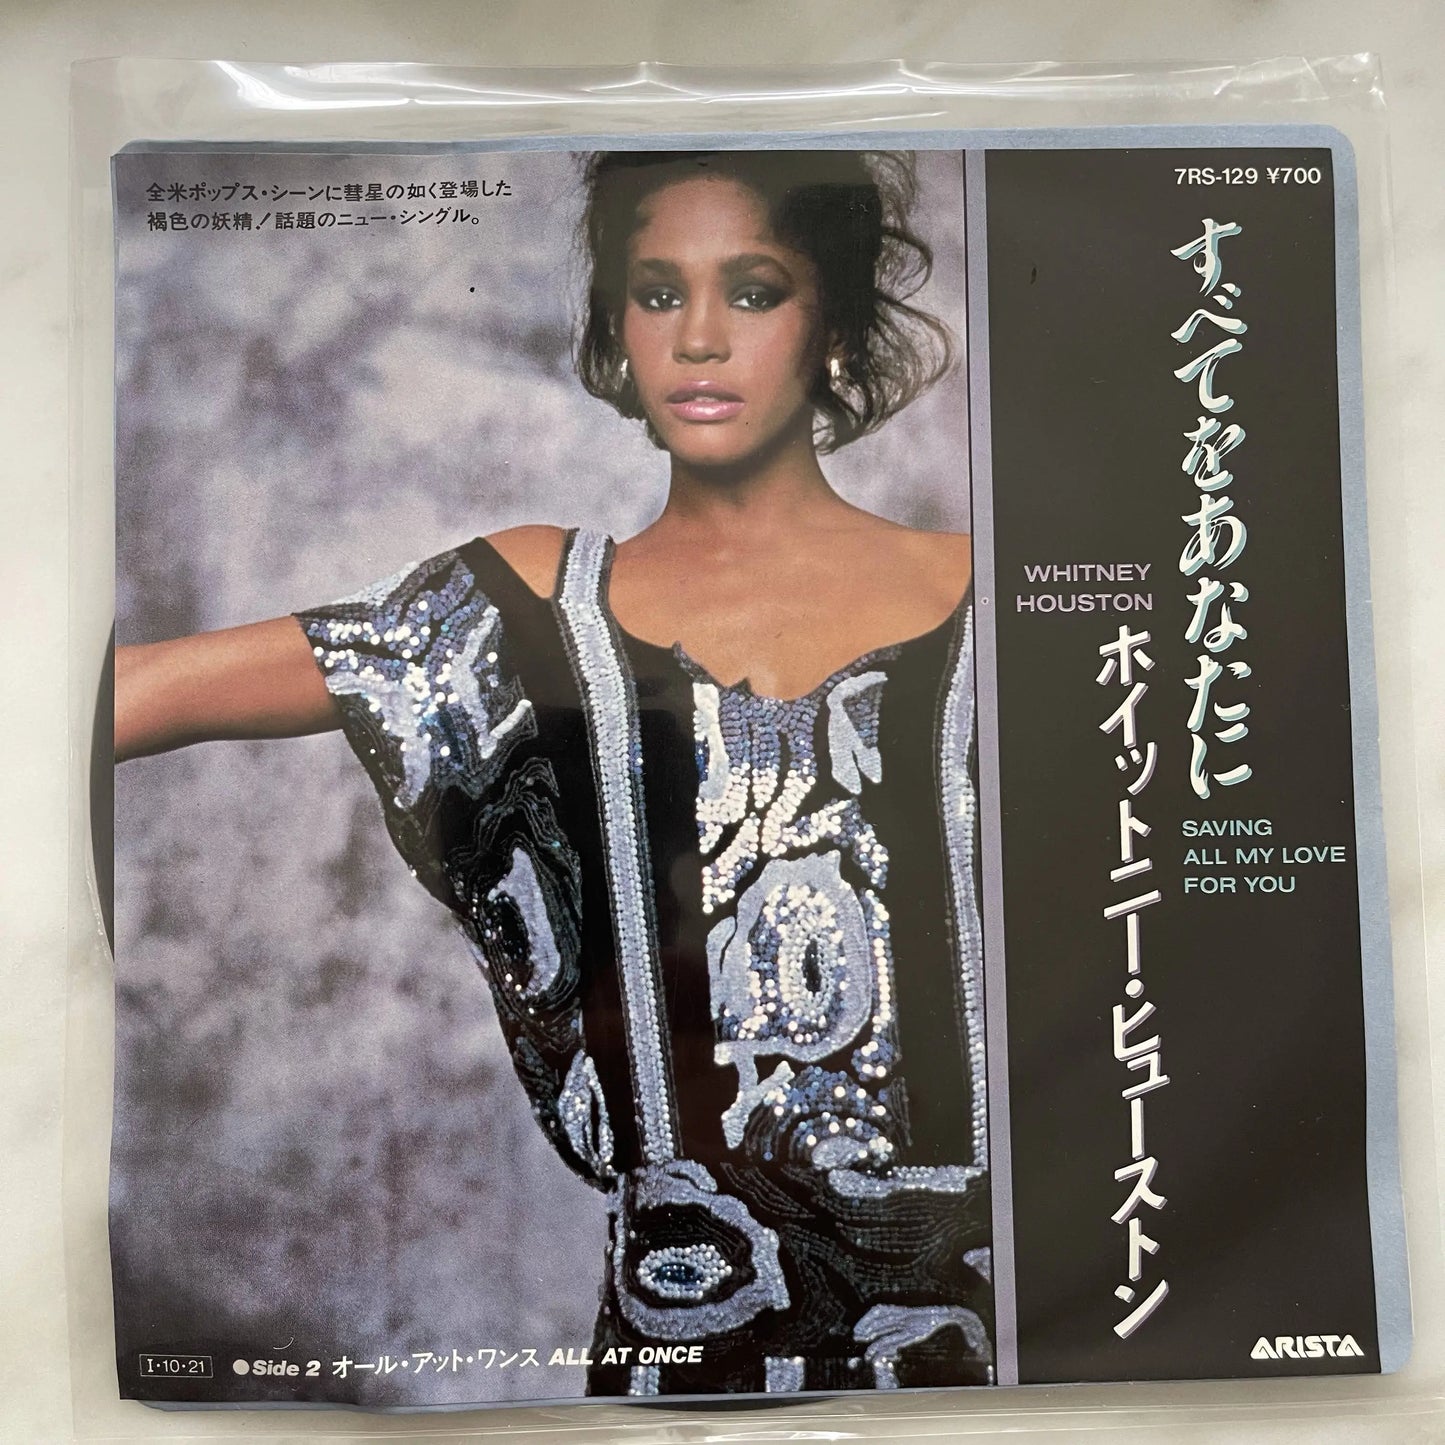 Whitney Houston - Saving All My Love For You [Japanese 45 rpm 7" Single Vinyl]